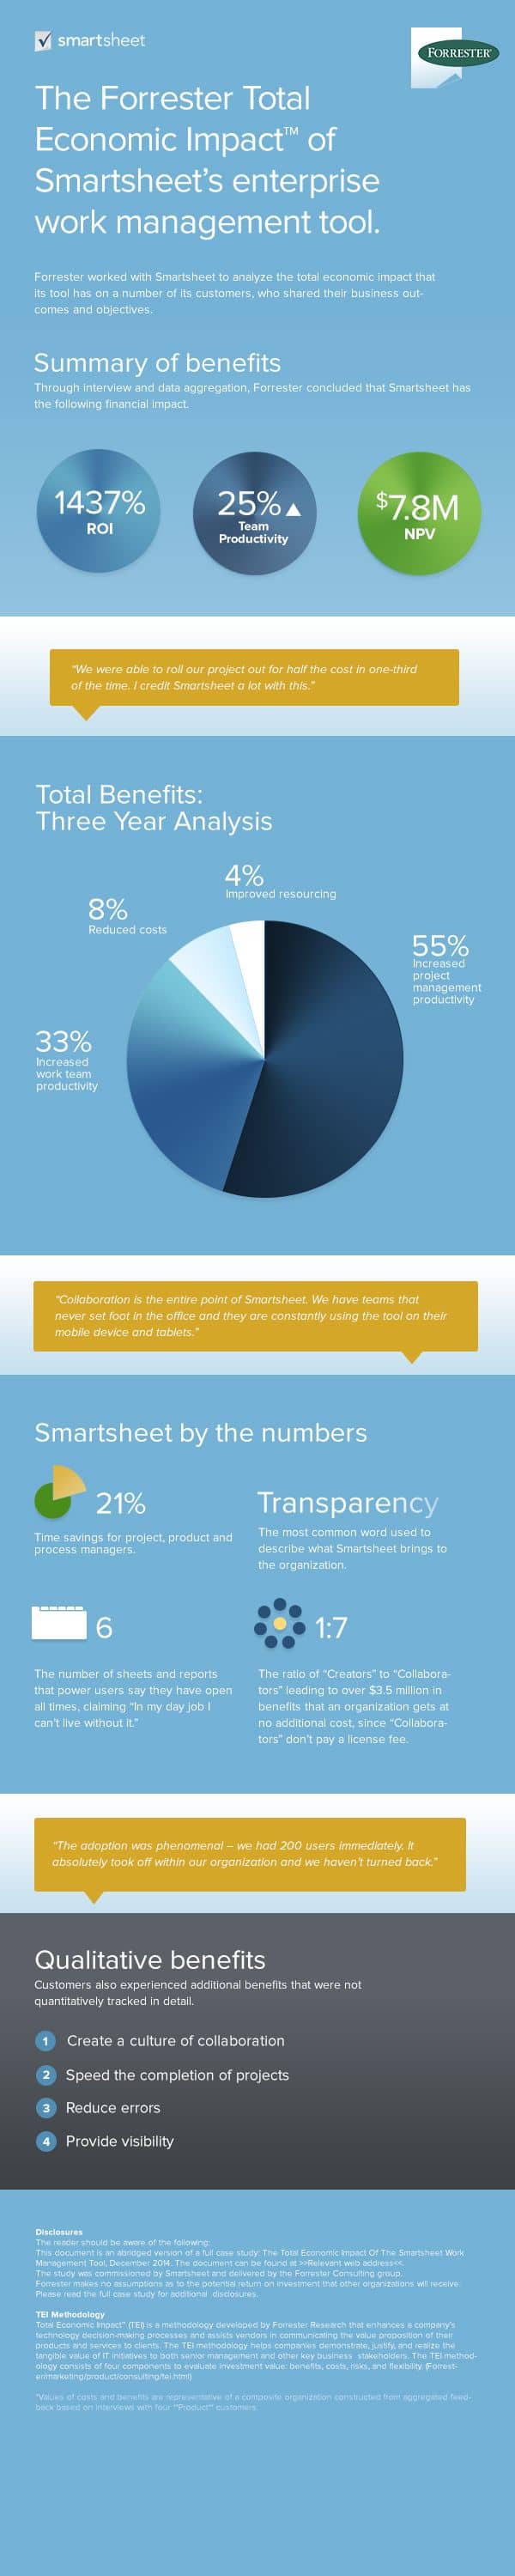 Forrester Study Infographic on True Benefits of Smartsheet